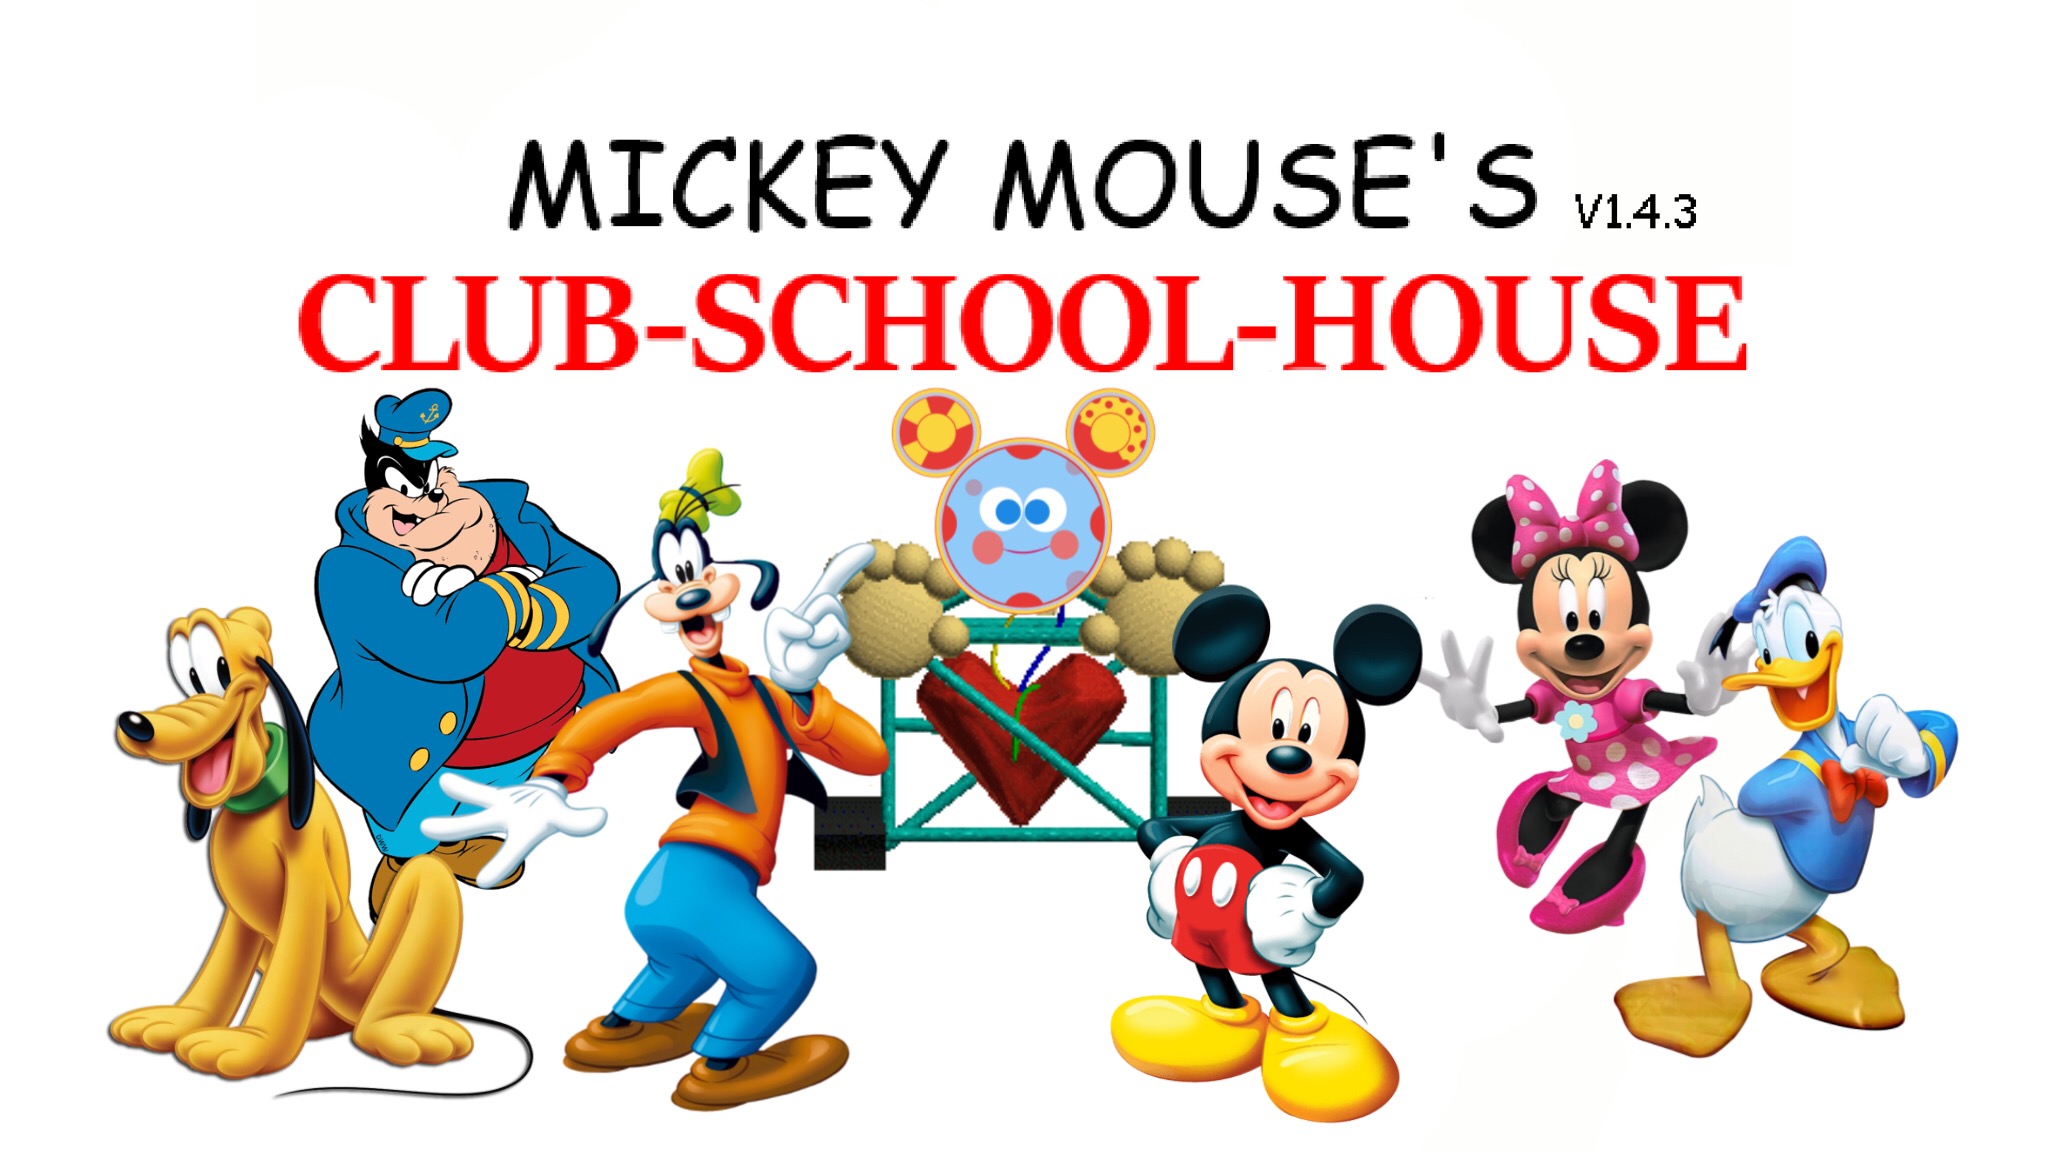 Mouse's Club-School-House - Baldi's Basics V1.4.3 Mod by MarioMaster7Games AKA Jario